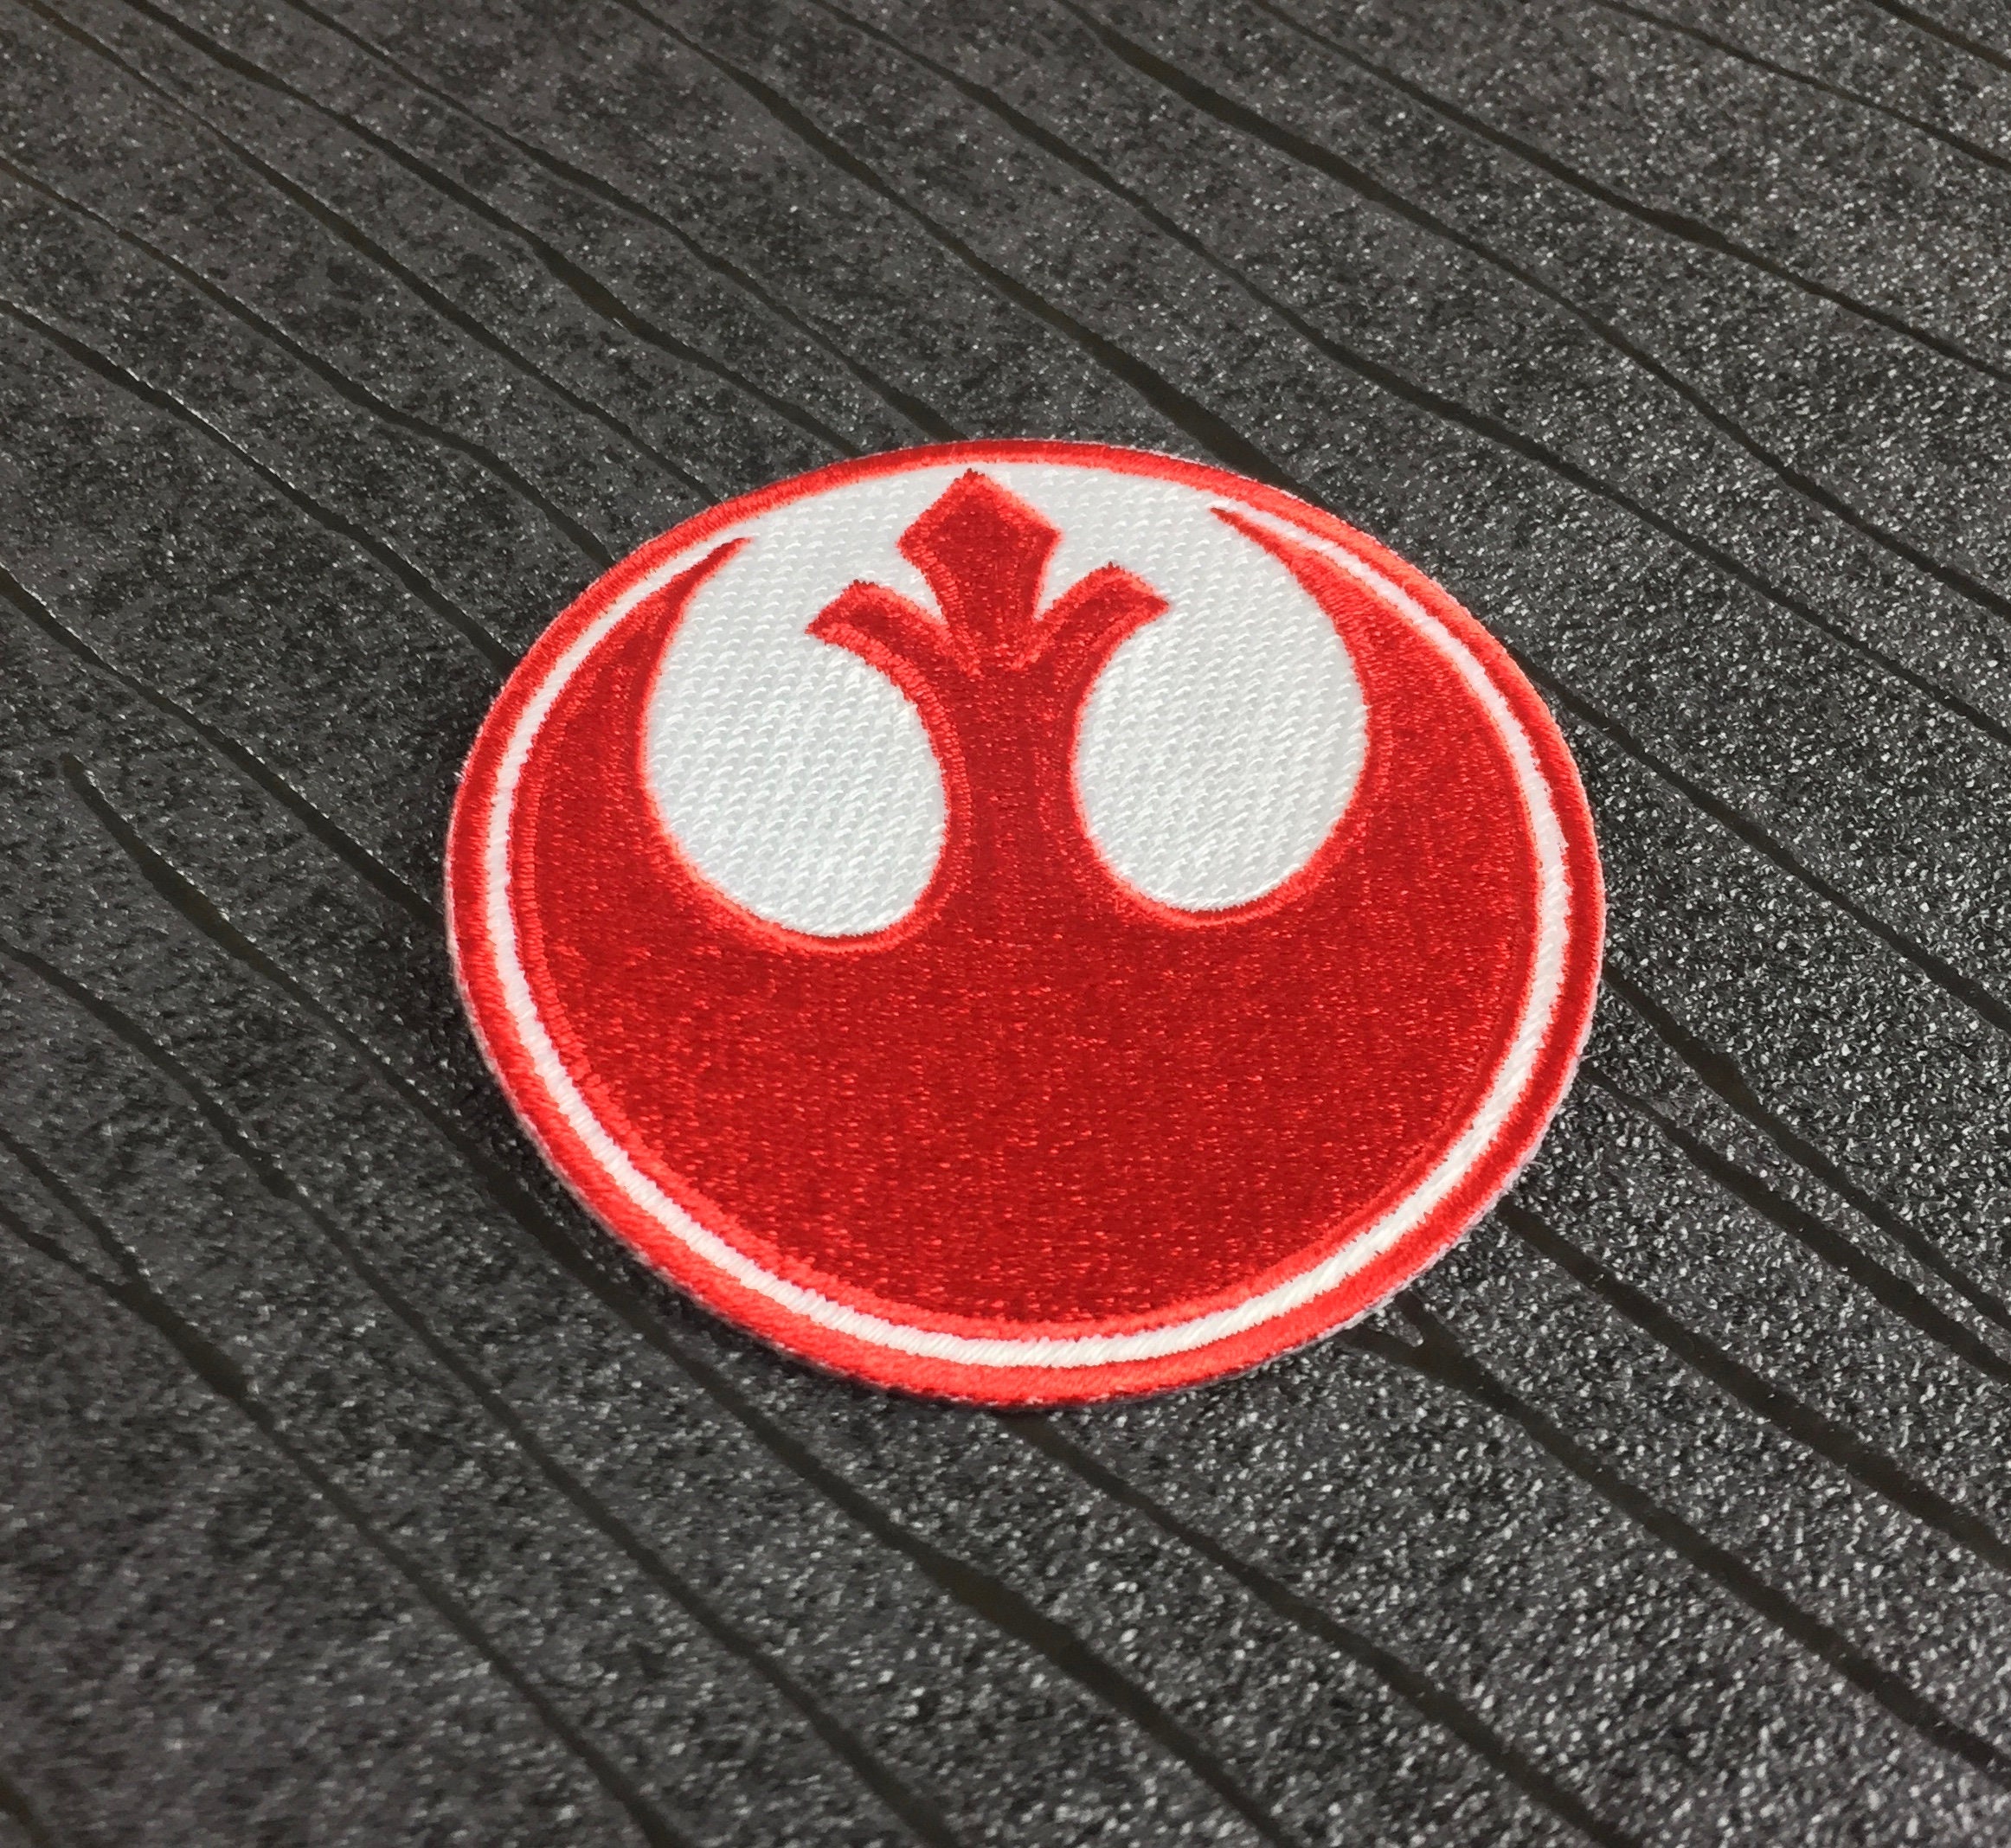 Star Wars X-Wing Red Squadron PVC Patch Rebel Alliance Poe Dameron 